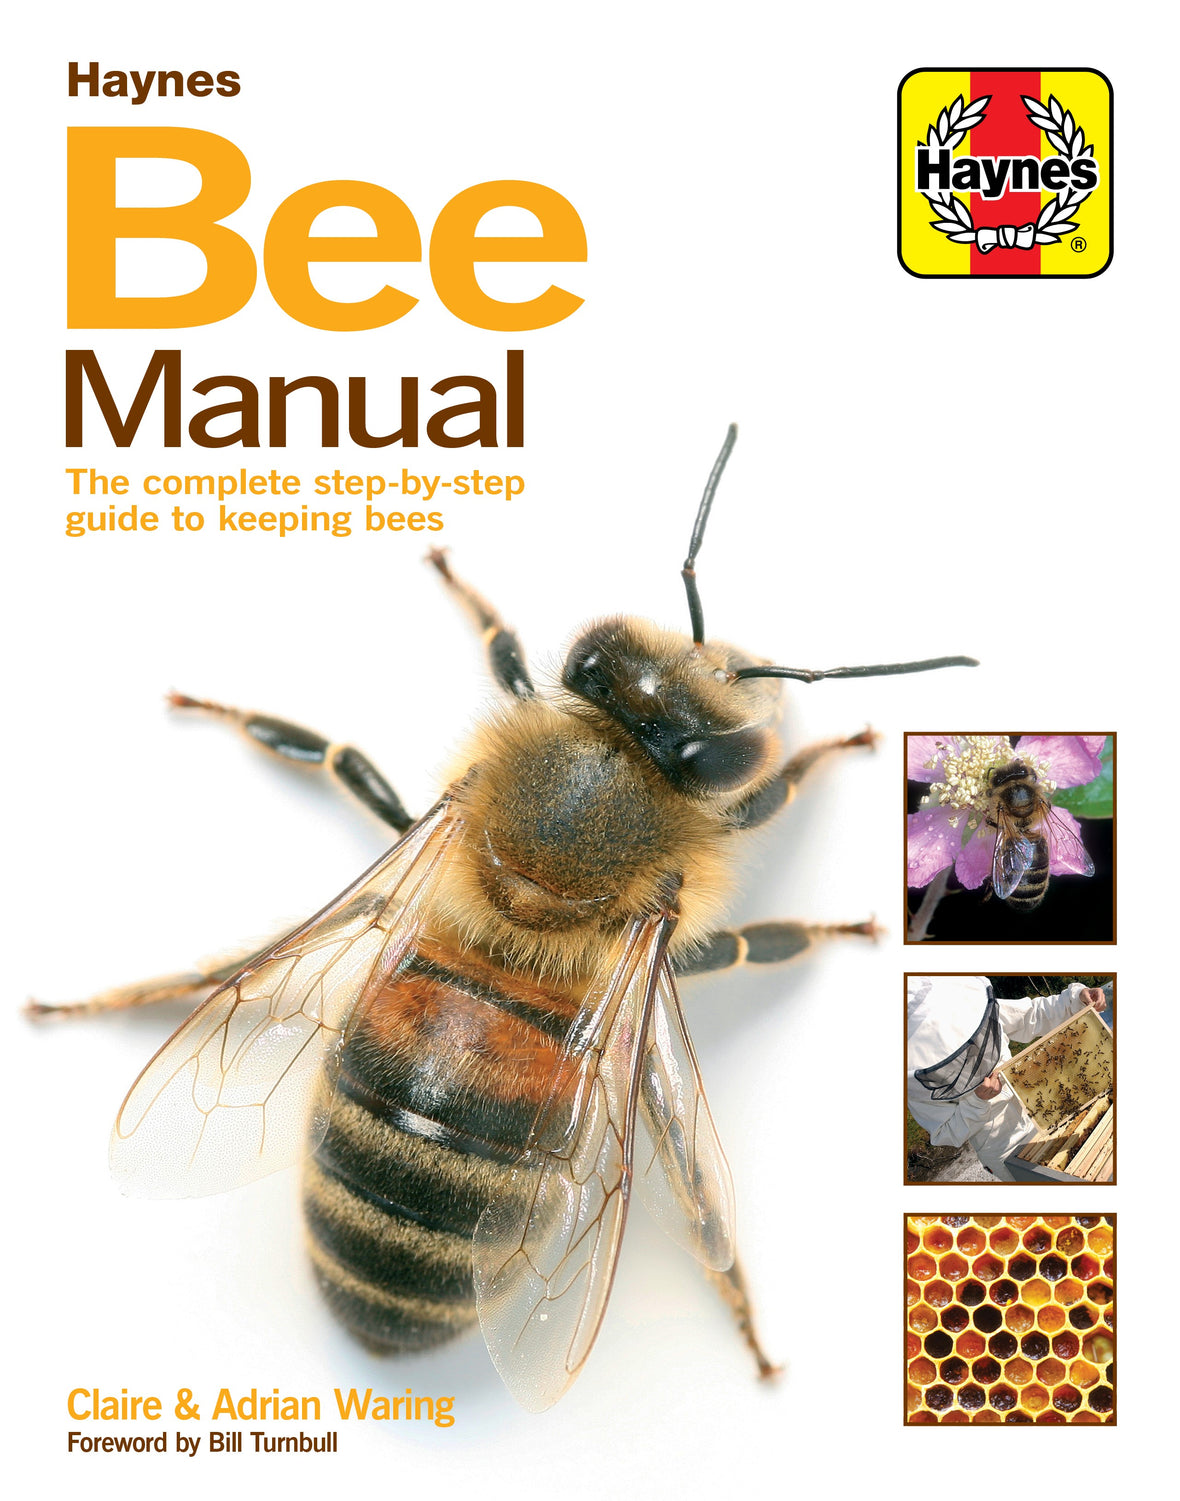 Book: Haynes Bee Manual